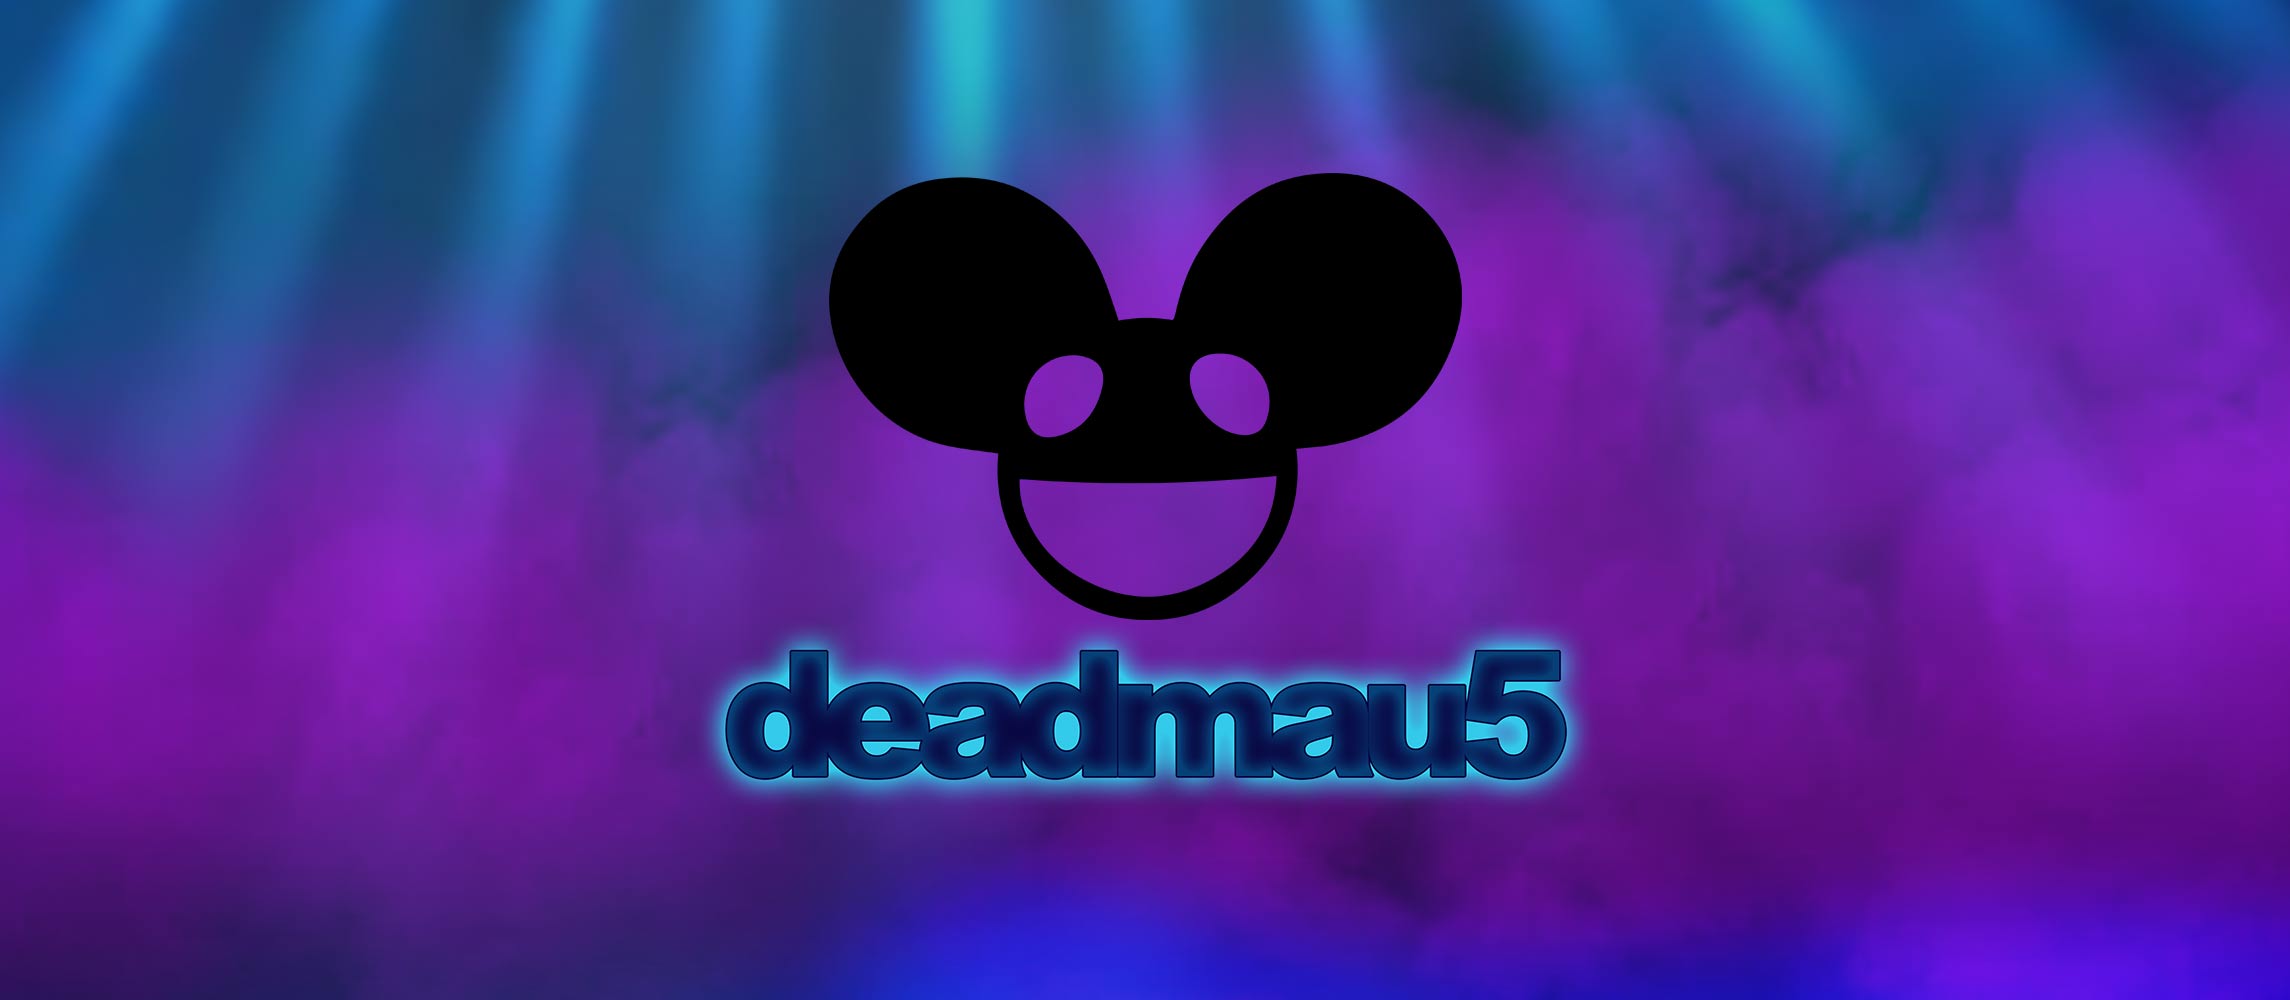 Deadmau5 Slot by Microgaming